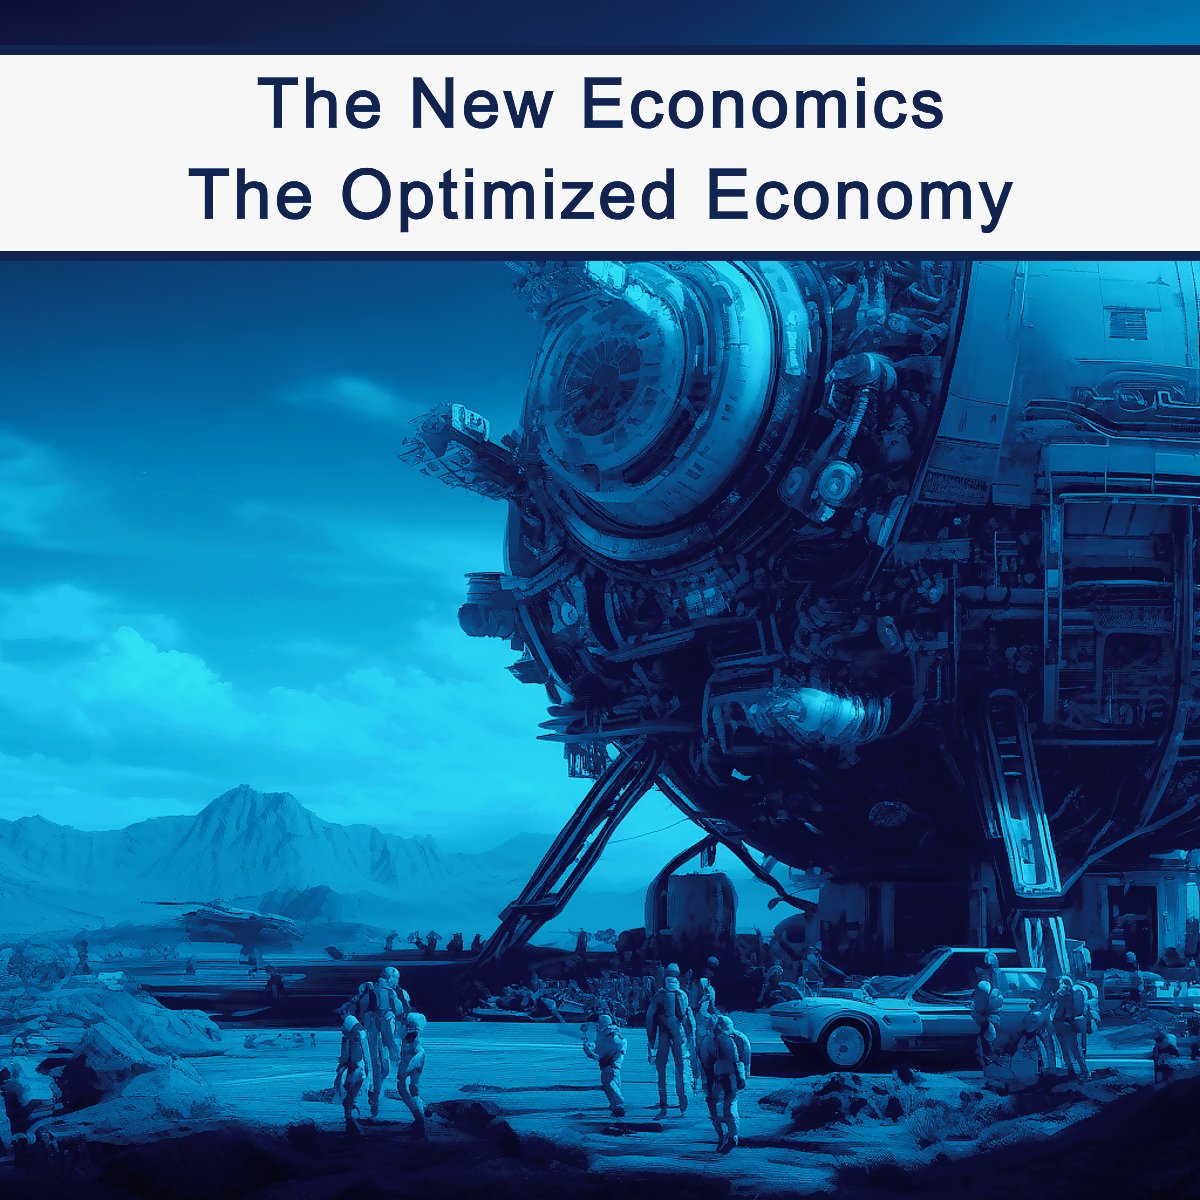 #Economy #Economics #NewEconomics 
#OptimizedEconomy – An economic model based on the potential of science. A new quality for the entire civilisation.

Optimized Economy 
bit.ly/4bfe9Bu